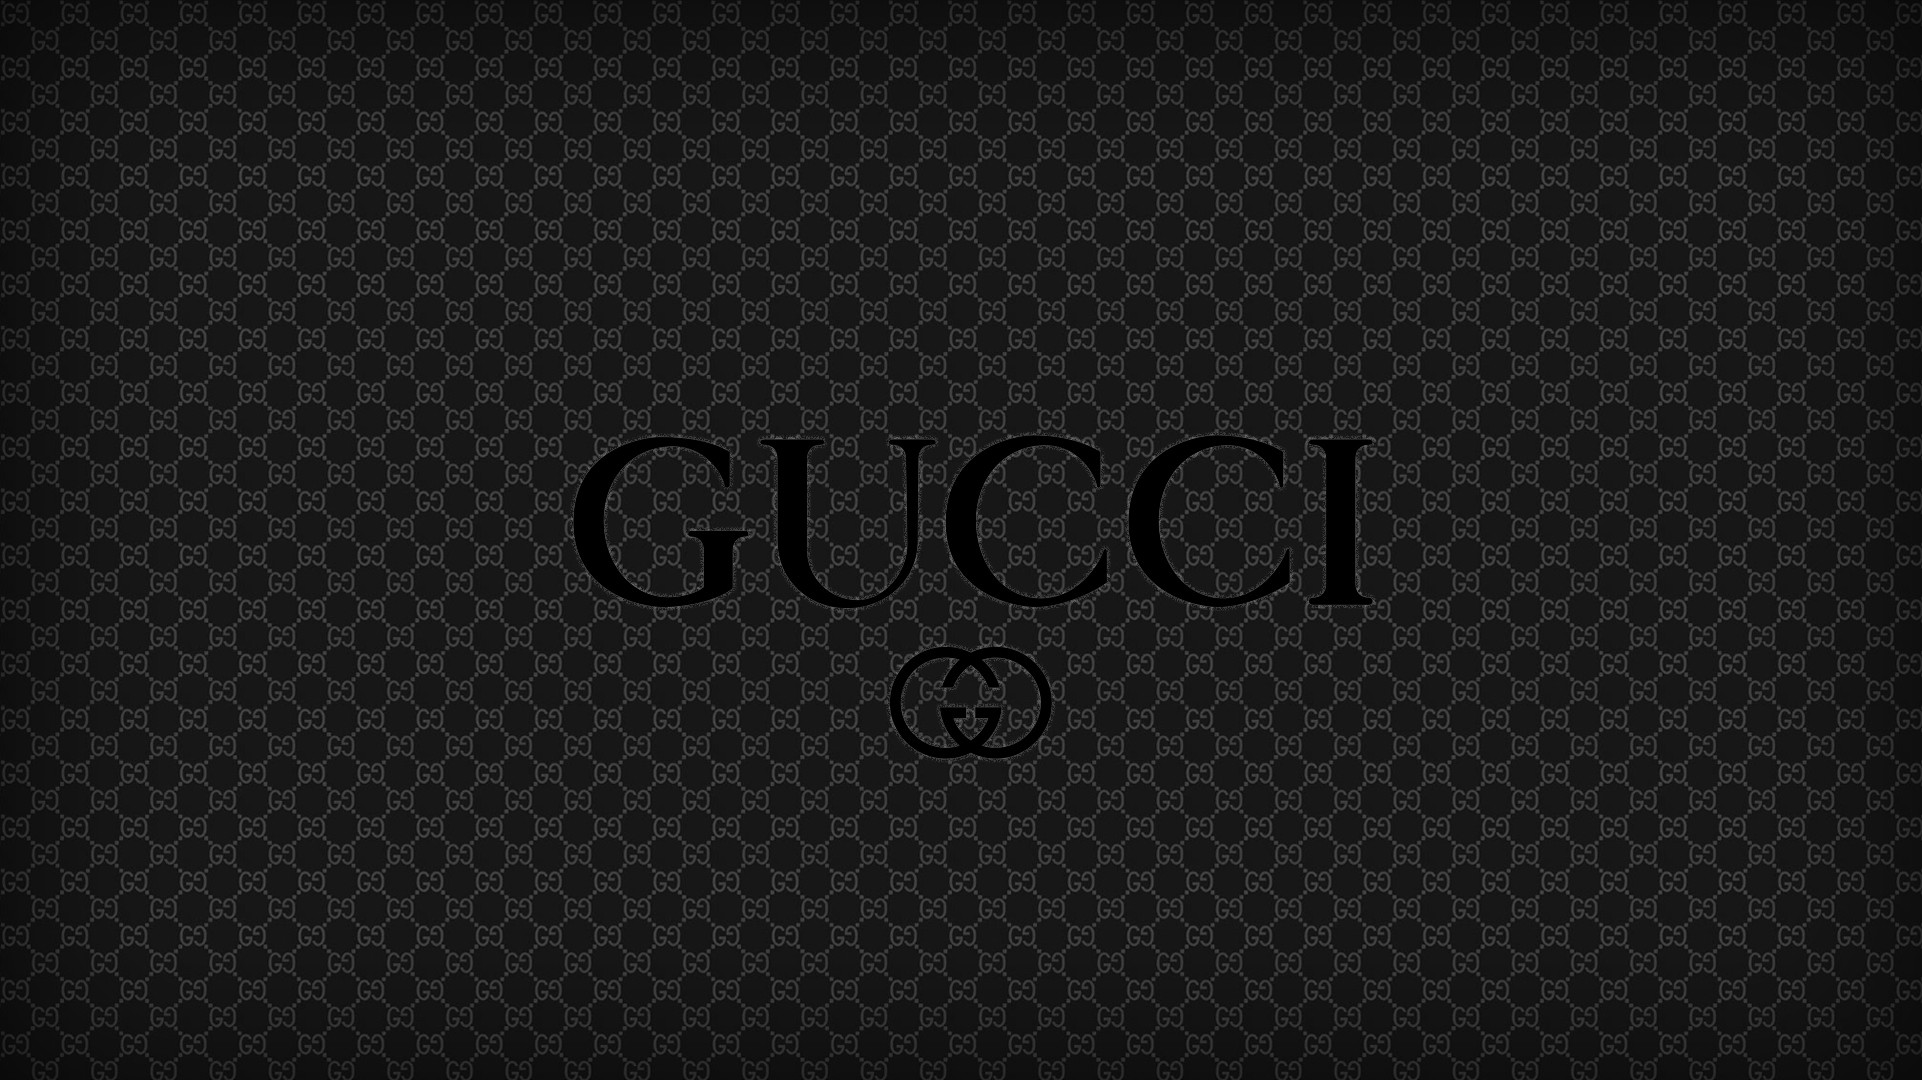 Gucci Louis Vuitton Prada Wallpapers The Art Of Mike Mignola